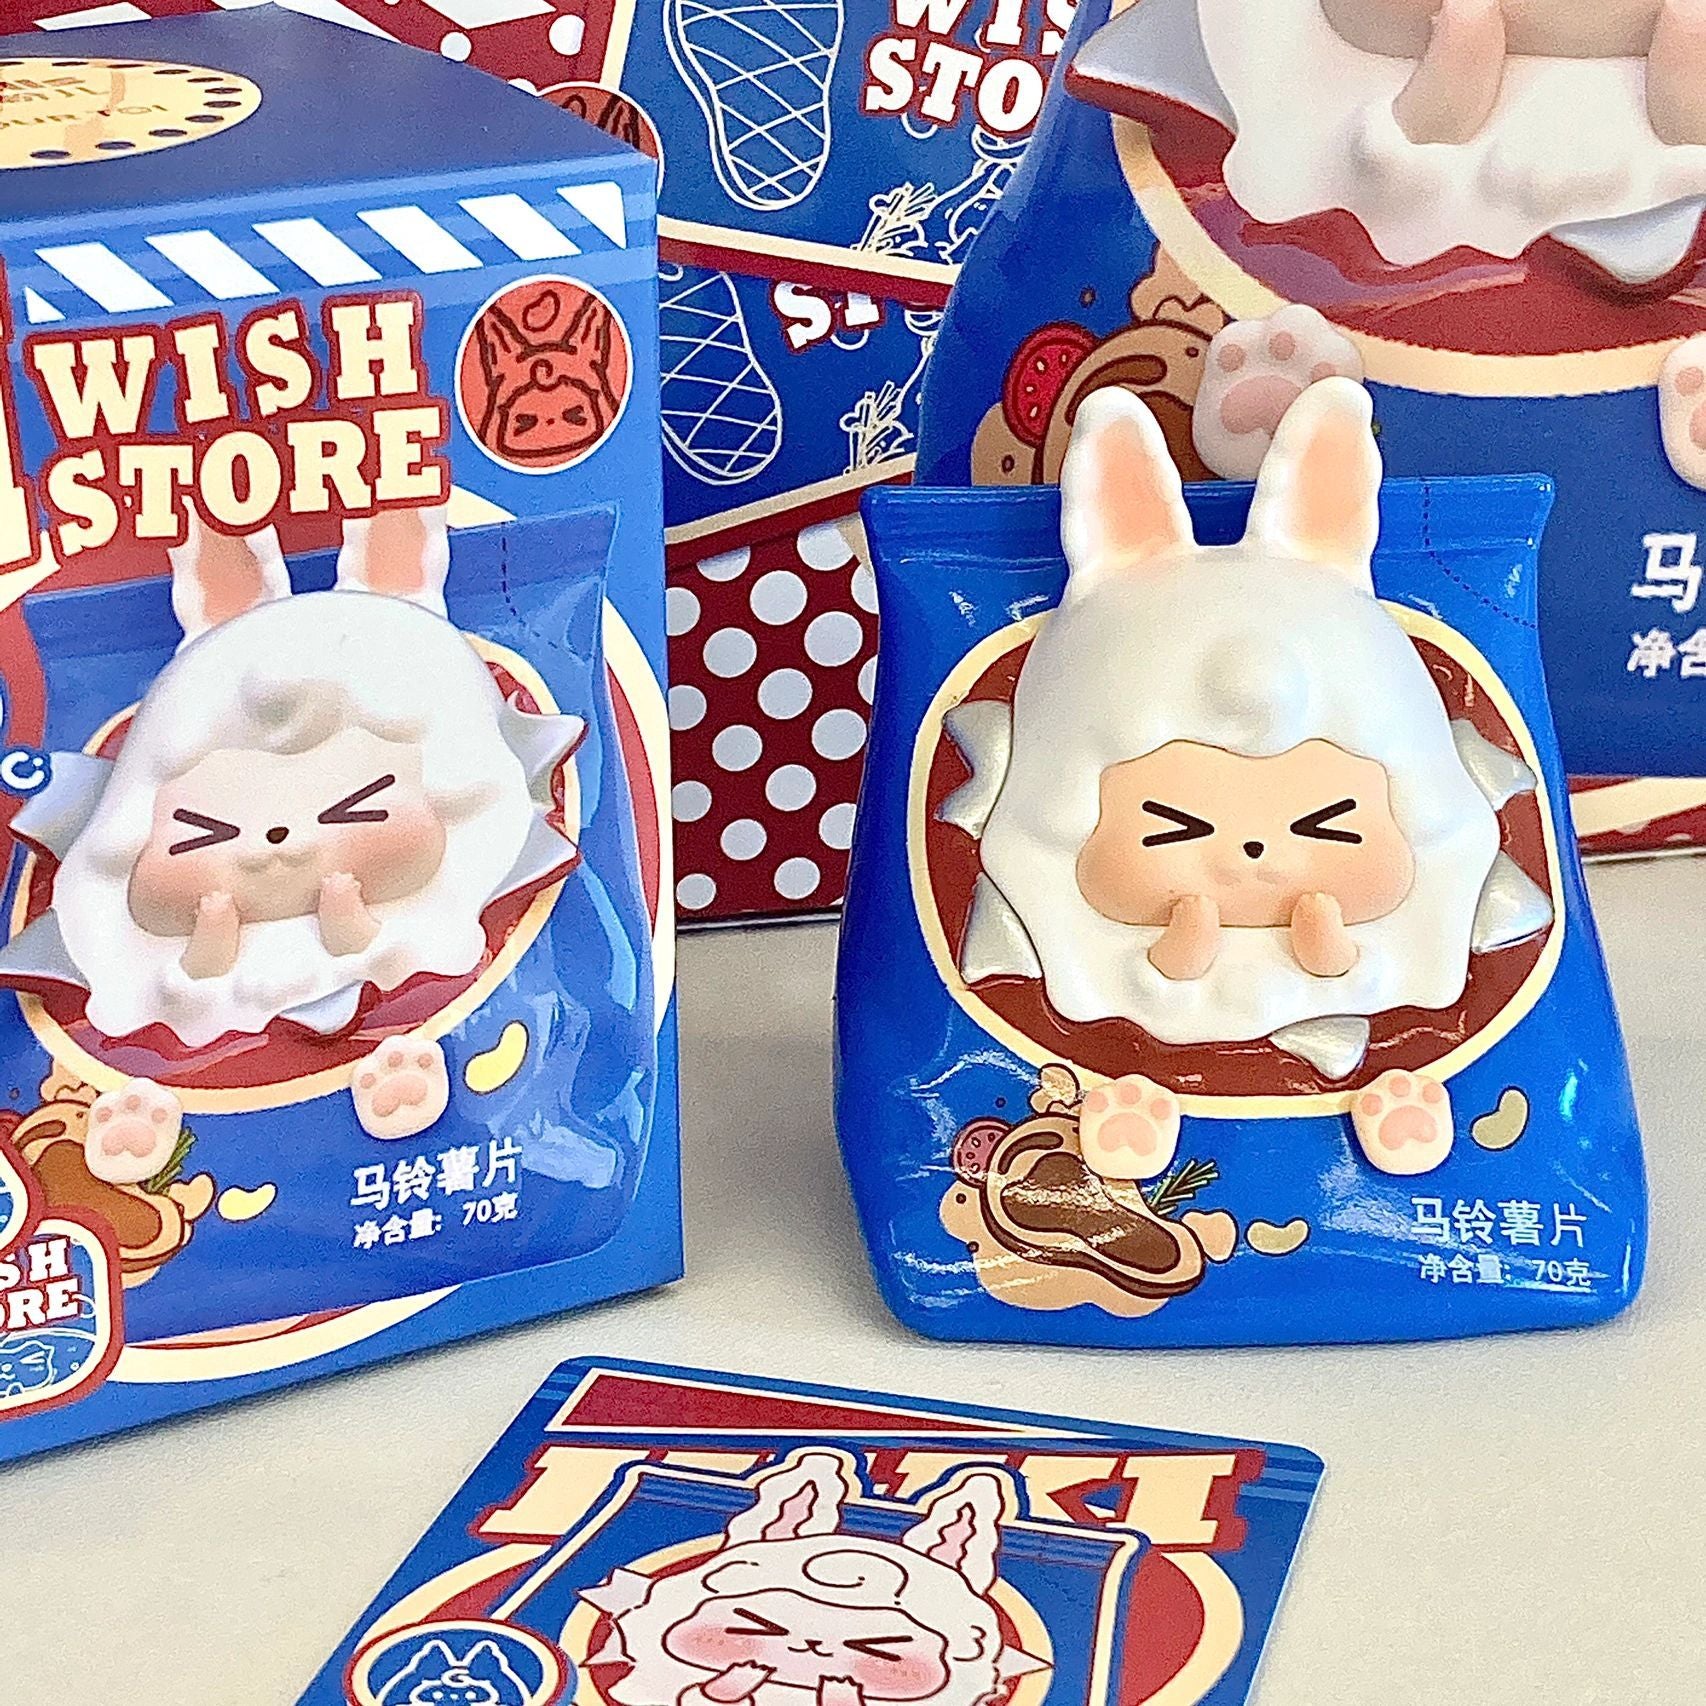 KIKI Wish Store Blind Box Series